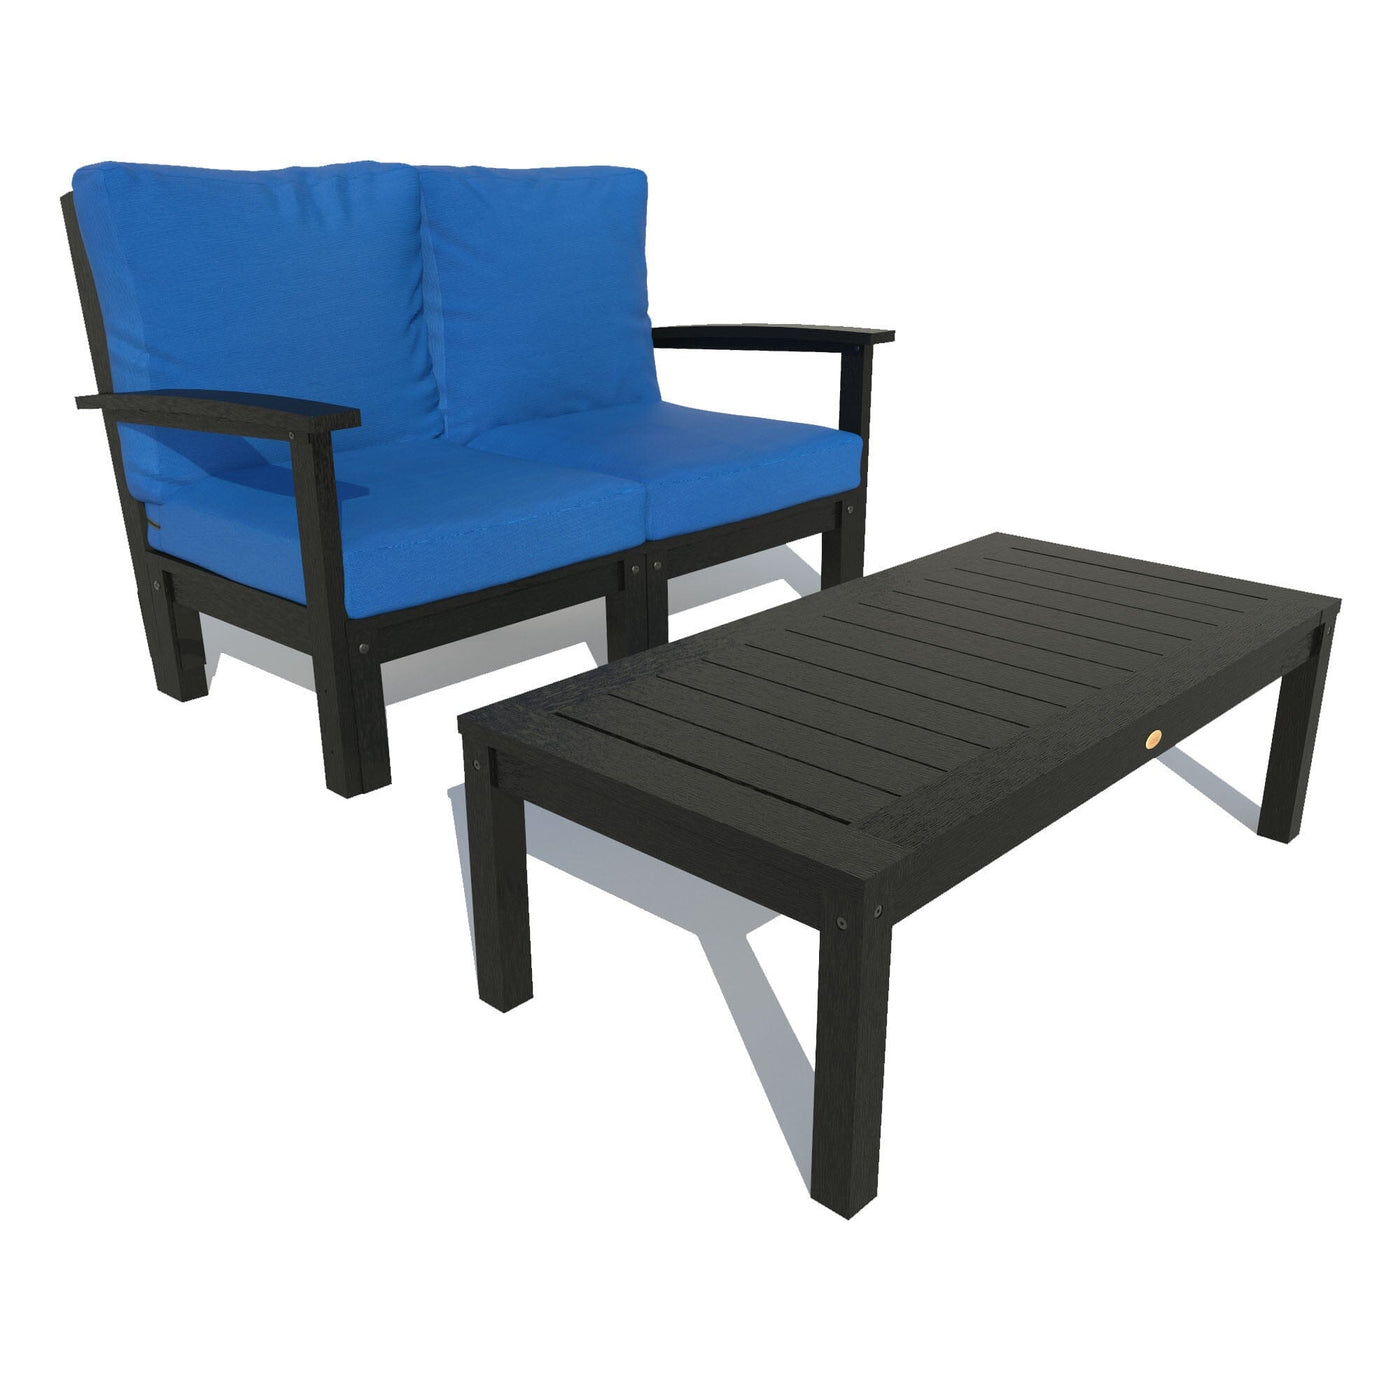 Bespoke Deep Seating: Loveseat and Conversation Table Deep Seating Highwood USA Cobalt Blue Black 